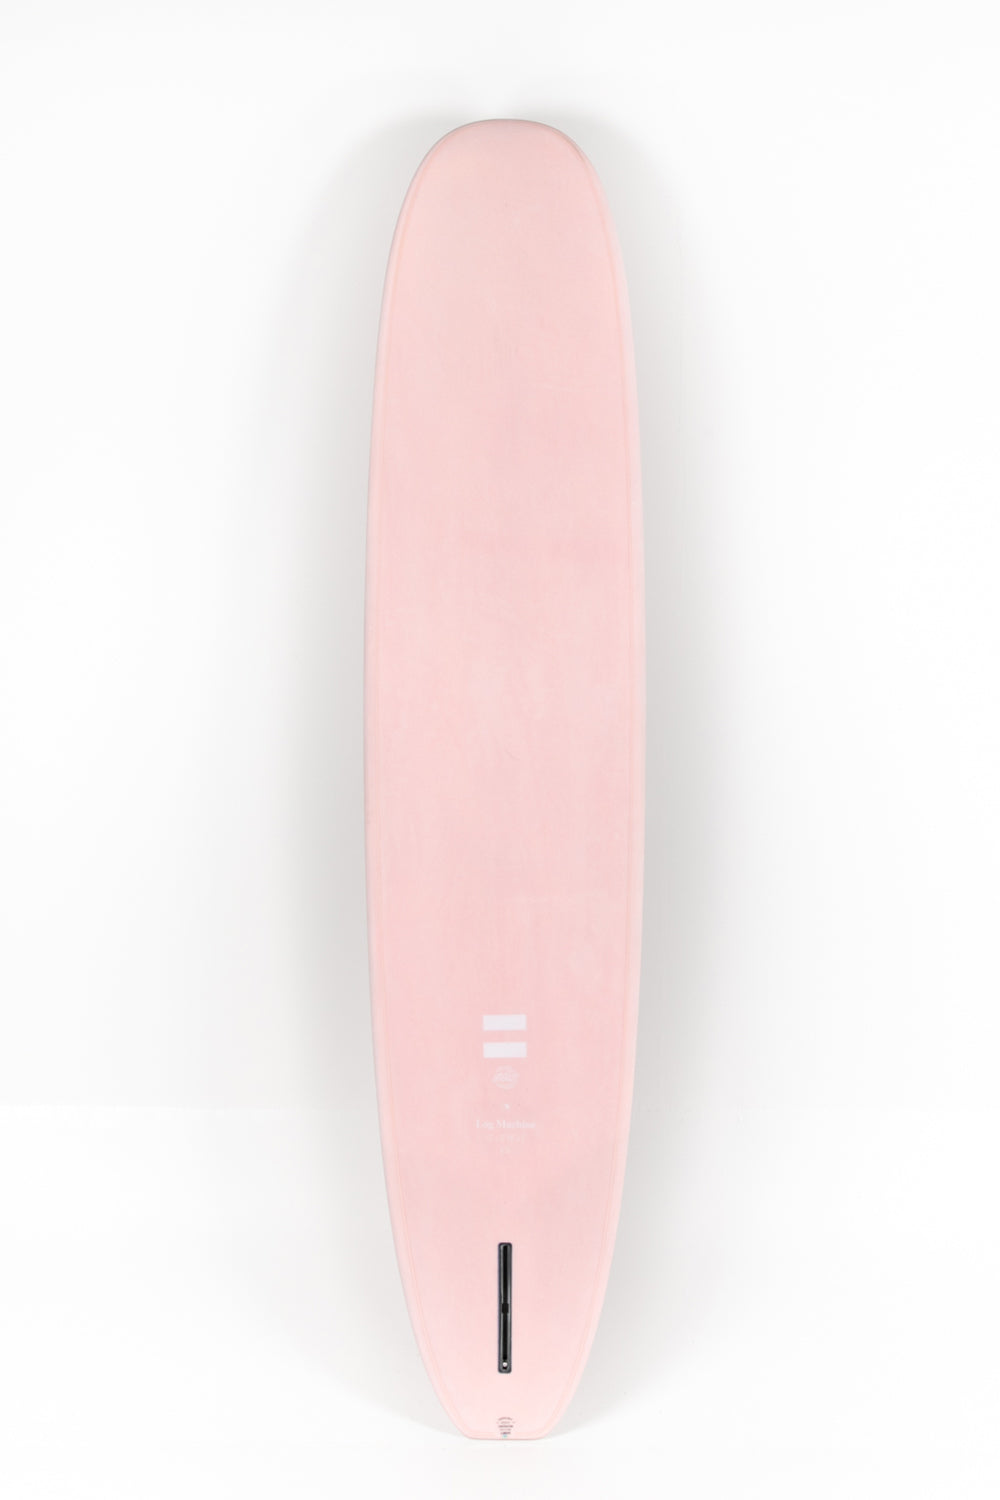 Pukas Surf Shop - Indio Surfboards - LOG MACHINE Pink - Endurance Epoxy 9´0 x 22 1/4 x 3 - 67,9L